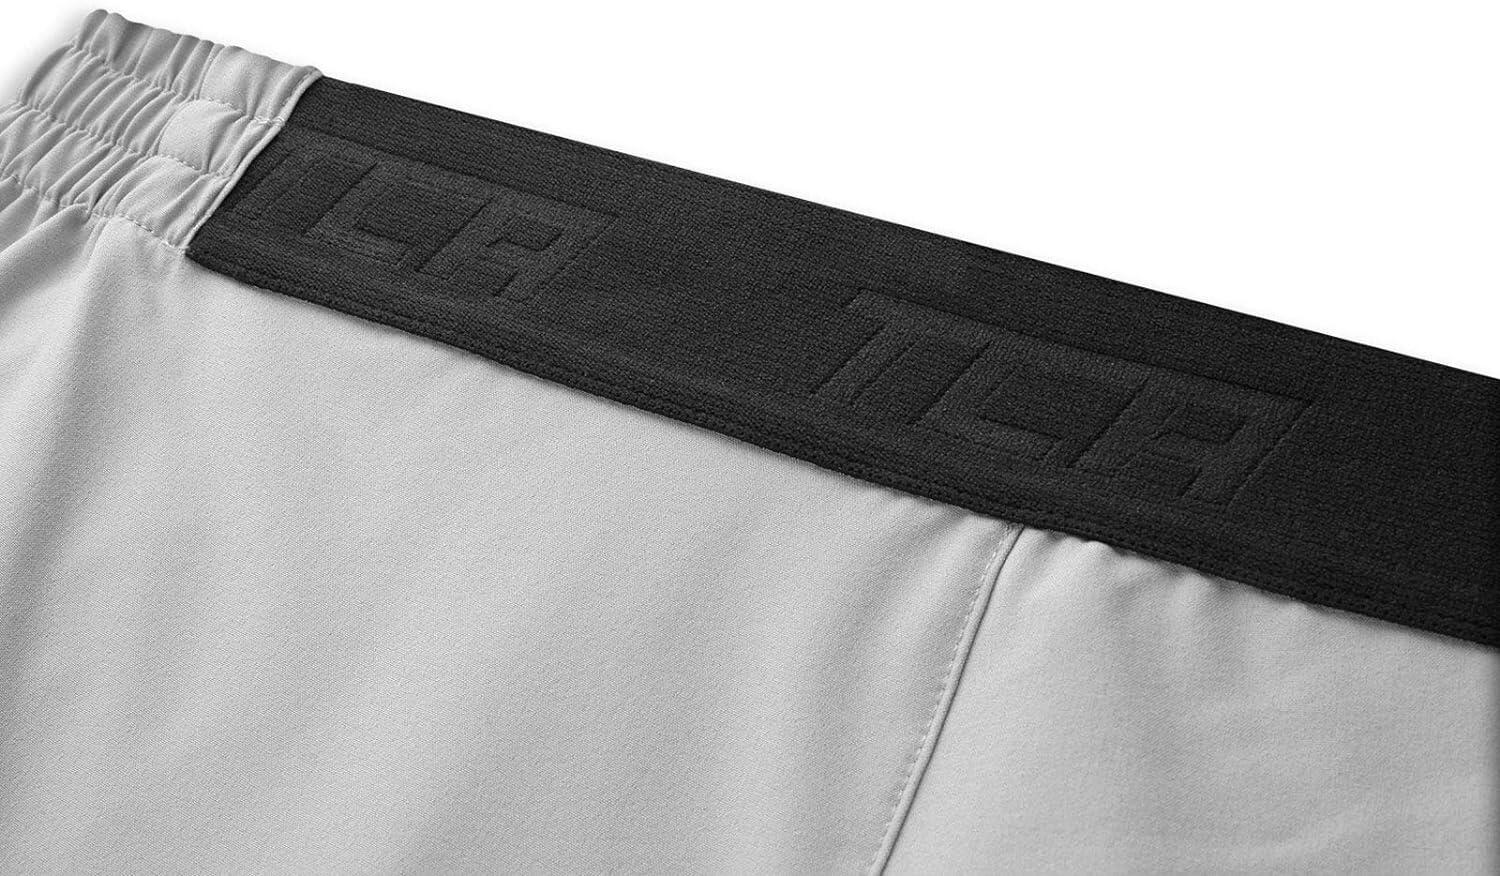 Men's Elite Tech Lightweight Running Shorts with Zip Pockets - Cool Grey/Black 5/6